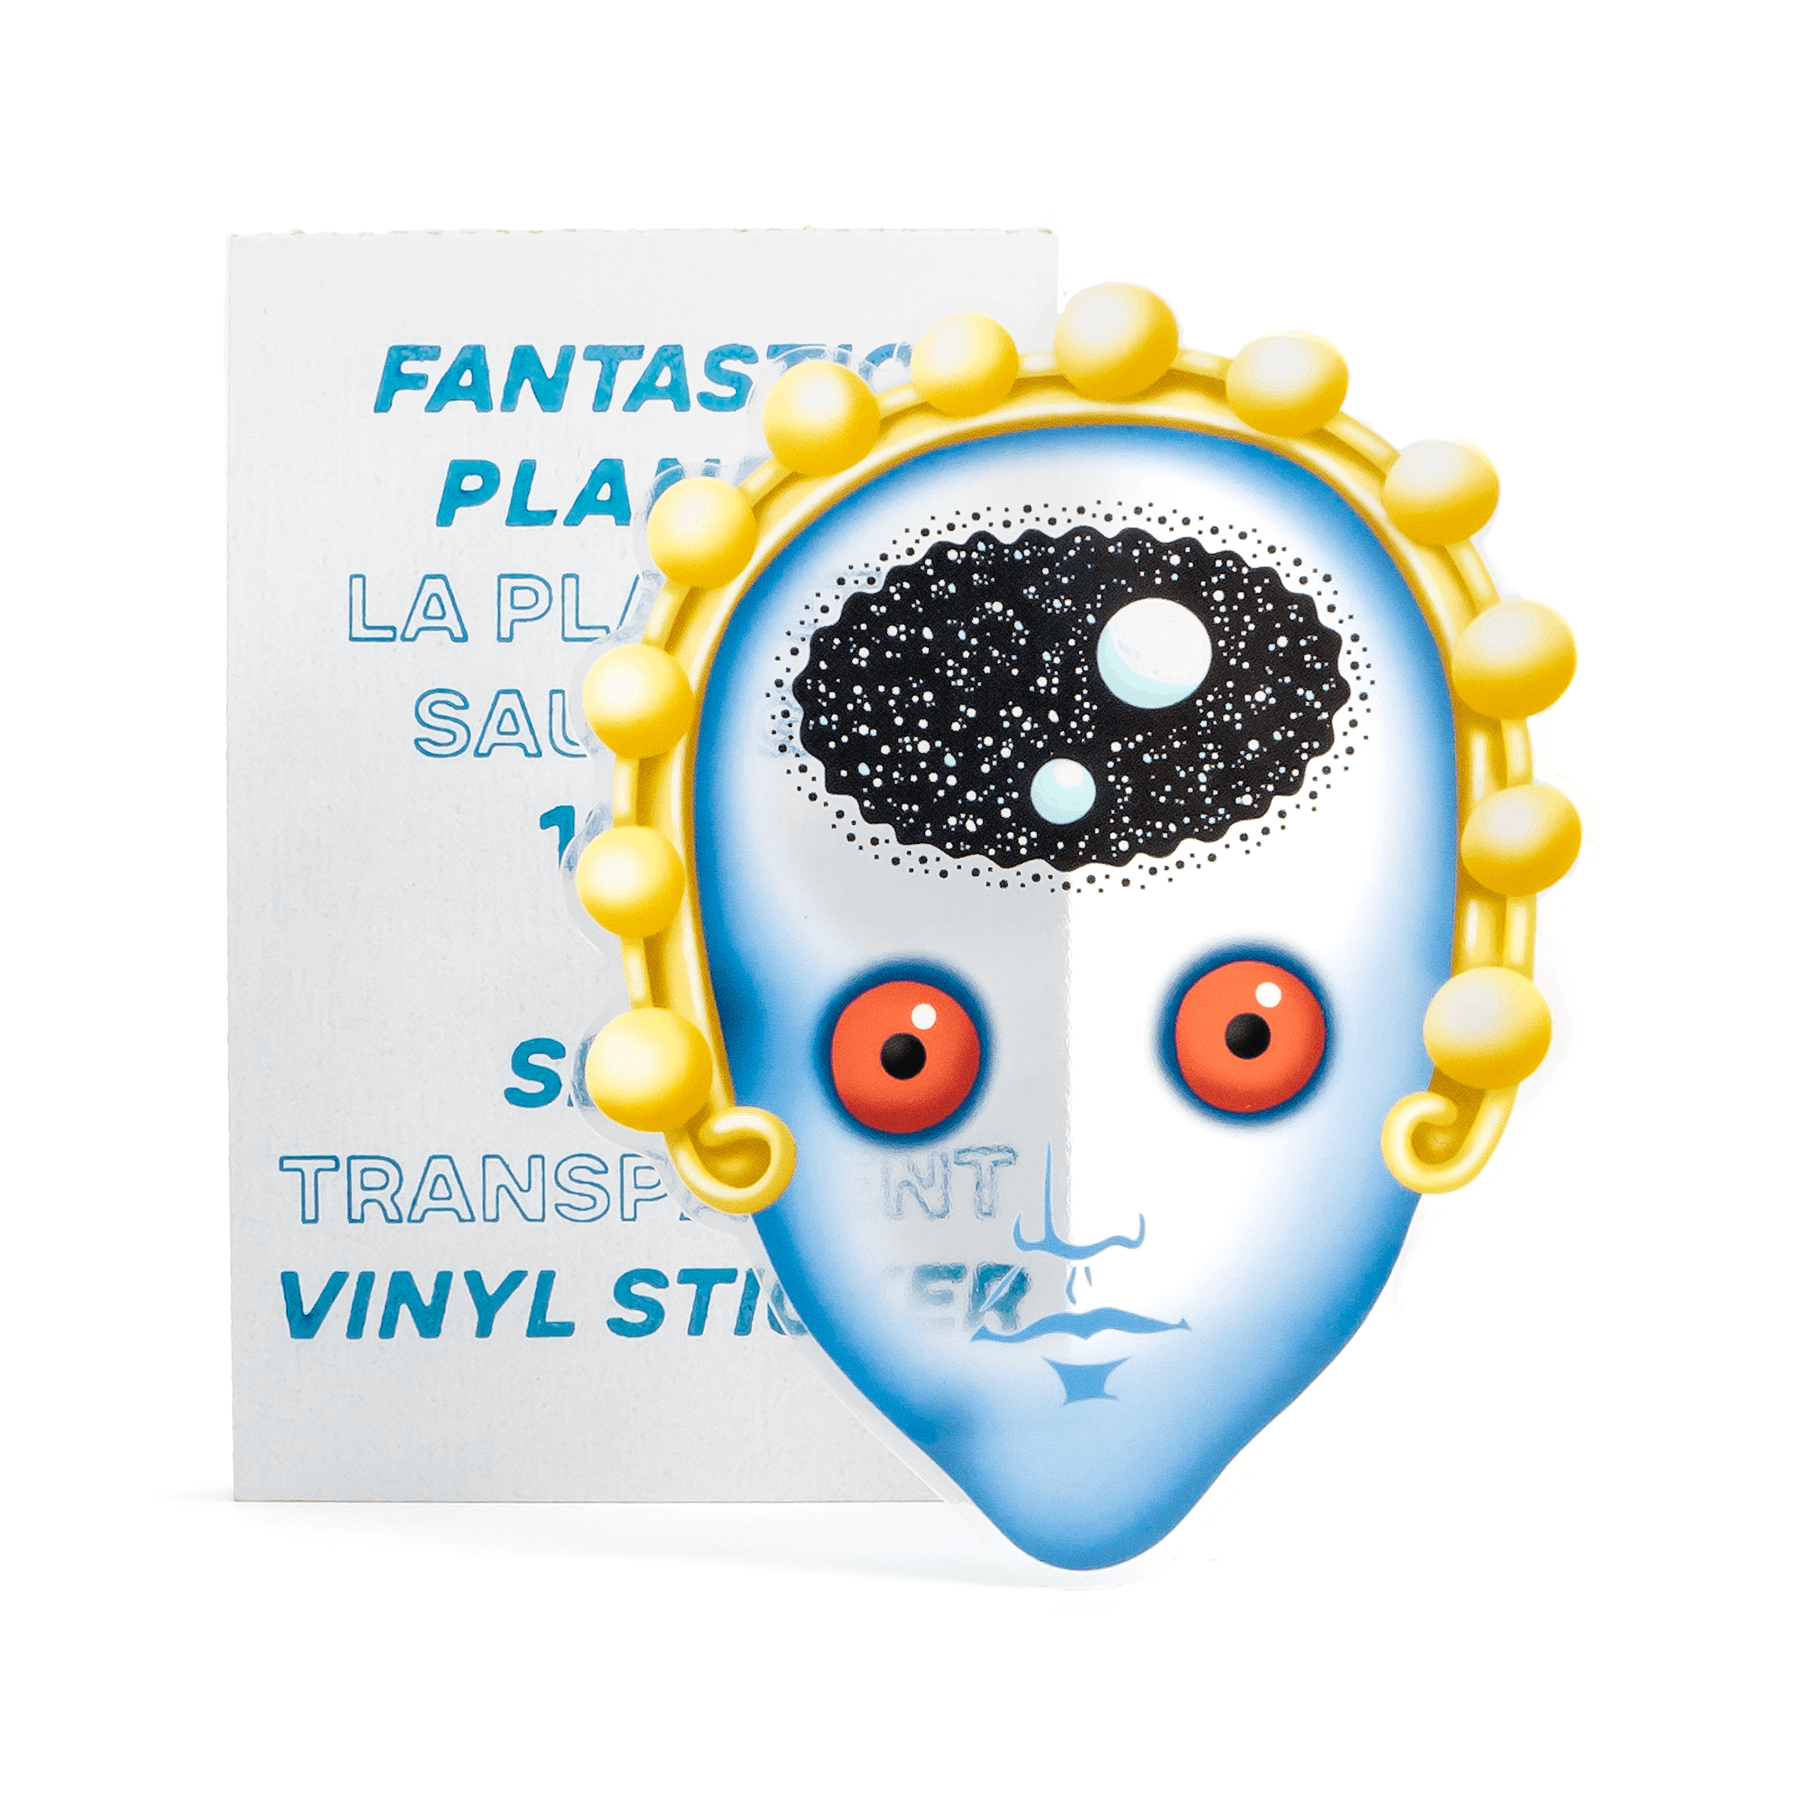 Tiva (Fantastic Planet) semi-transparent vinyl sticker set